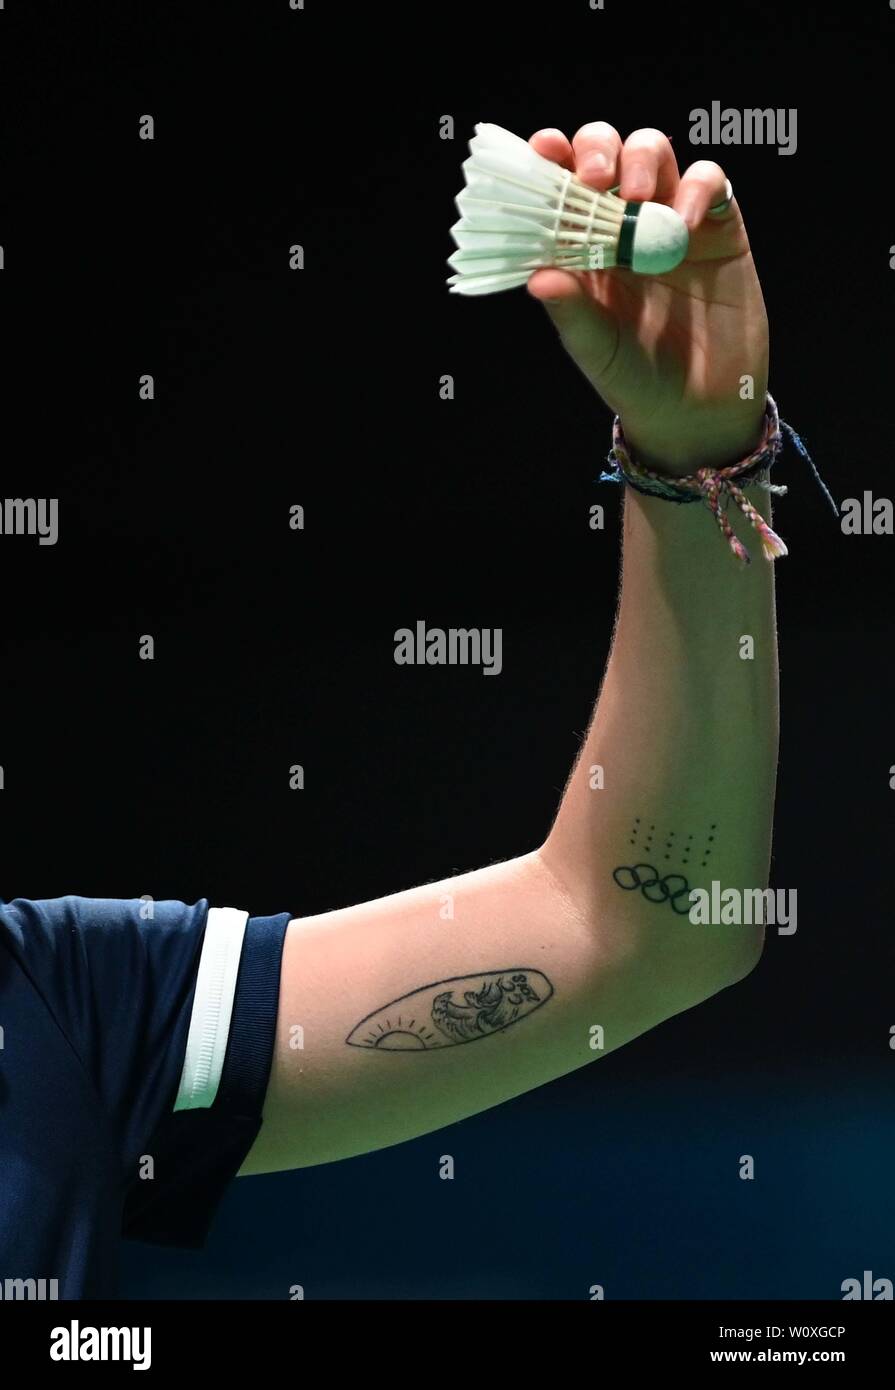 Olympic Rings Tattoo Stockfotos und -bilder Kaufen - Alamy